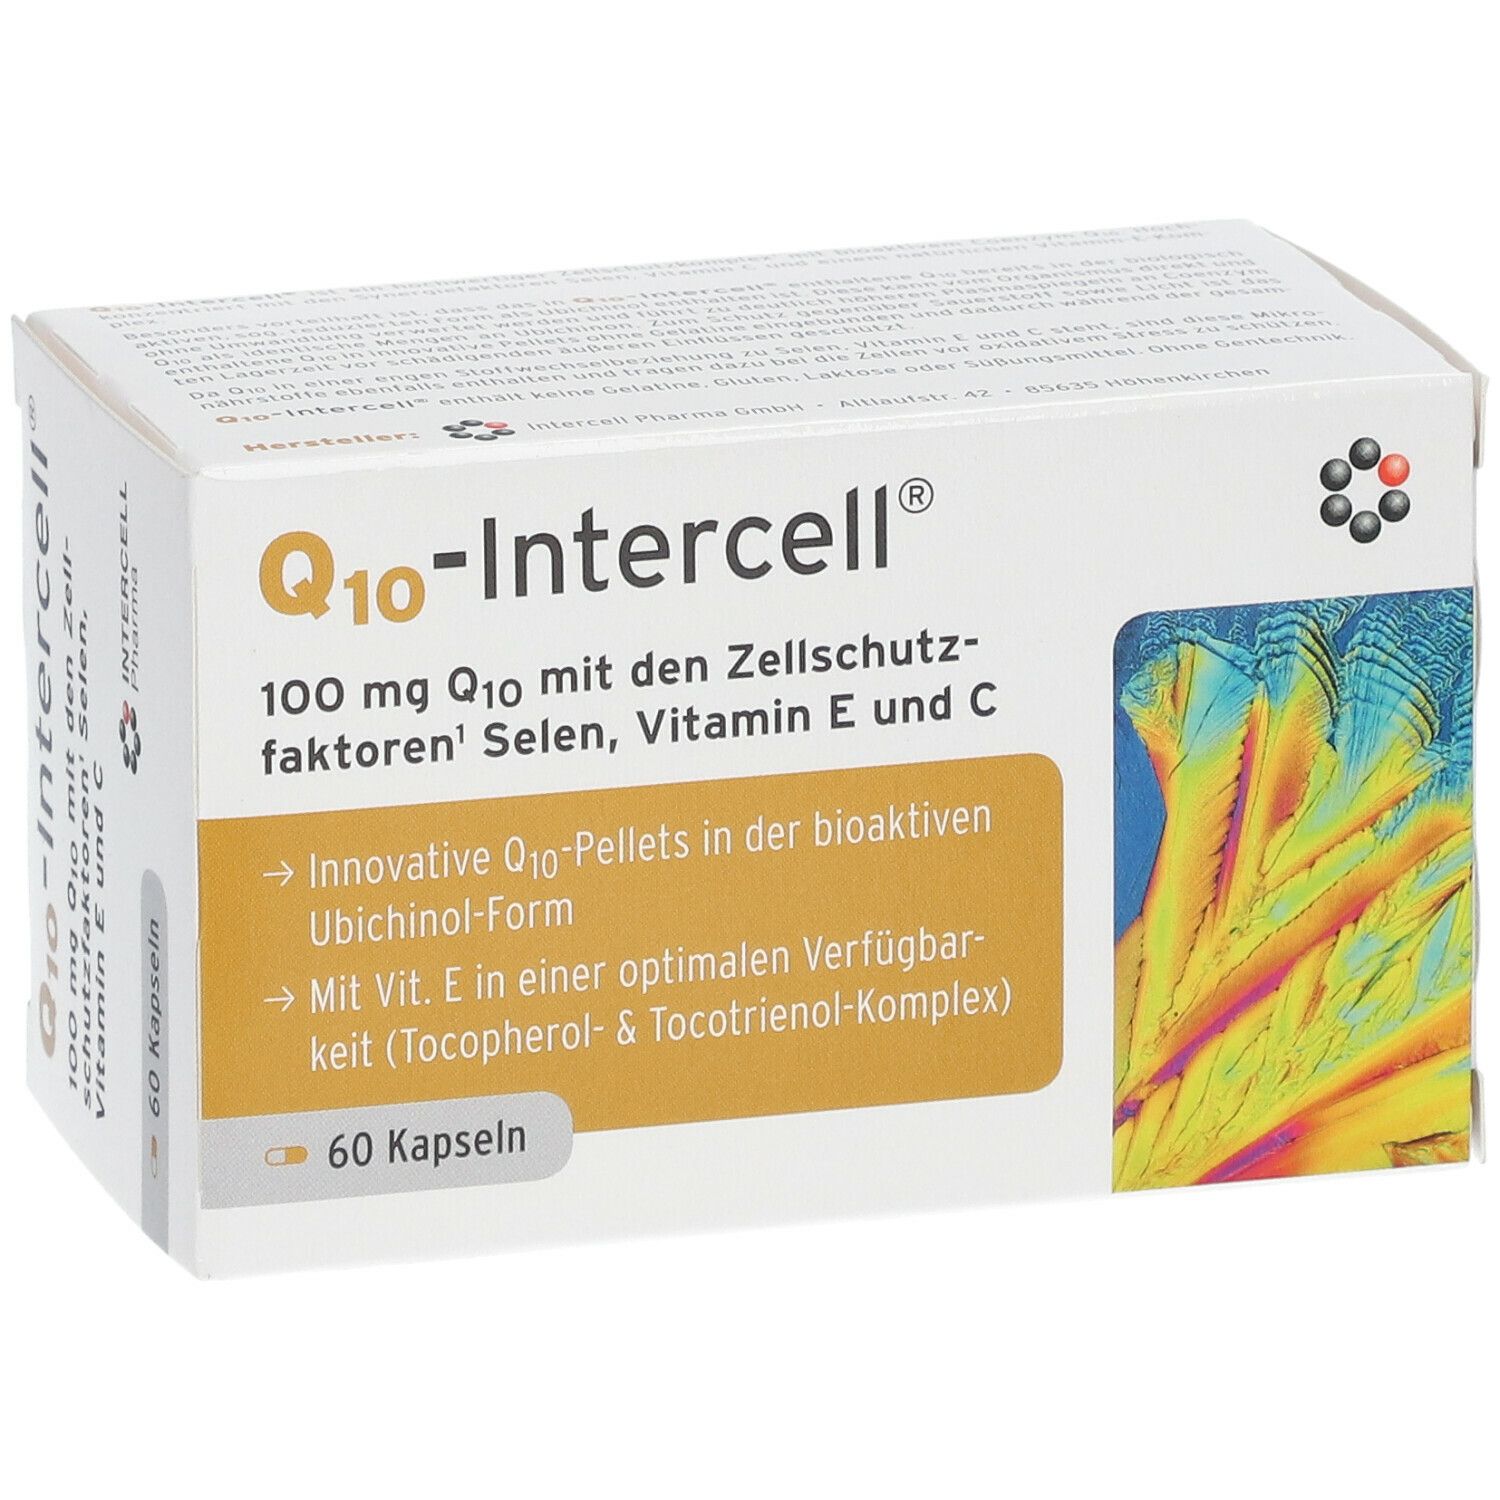 Q10- Intercell®